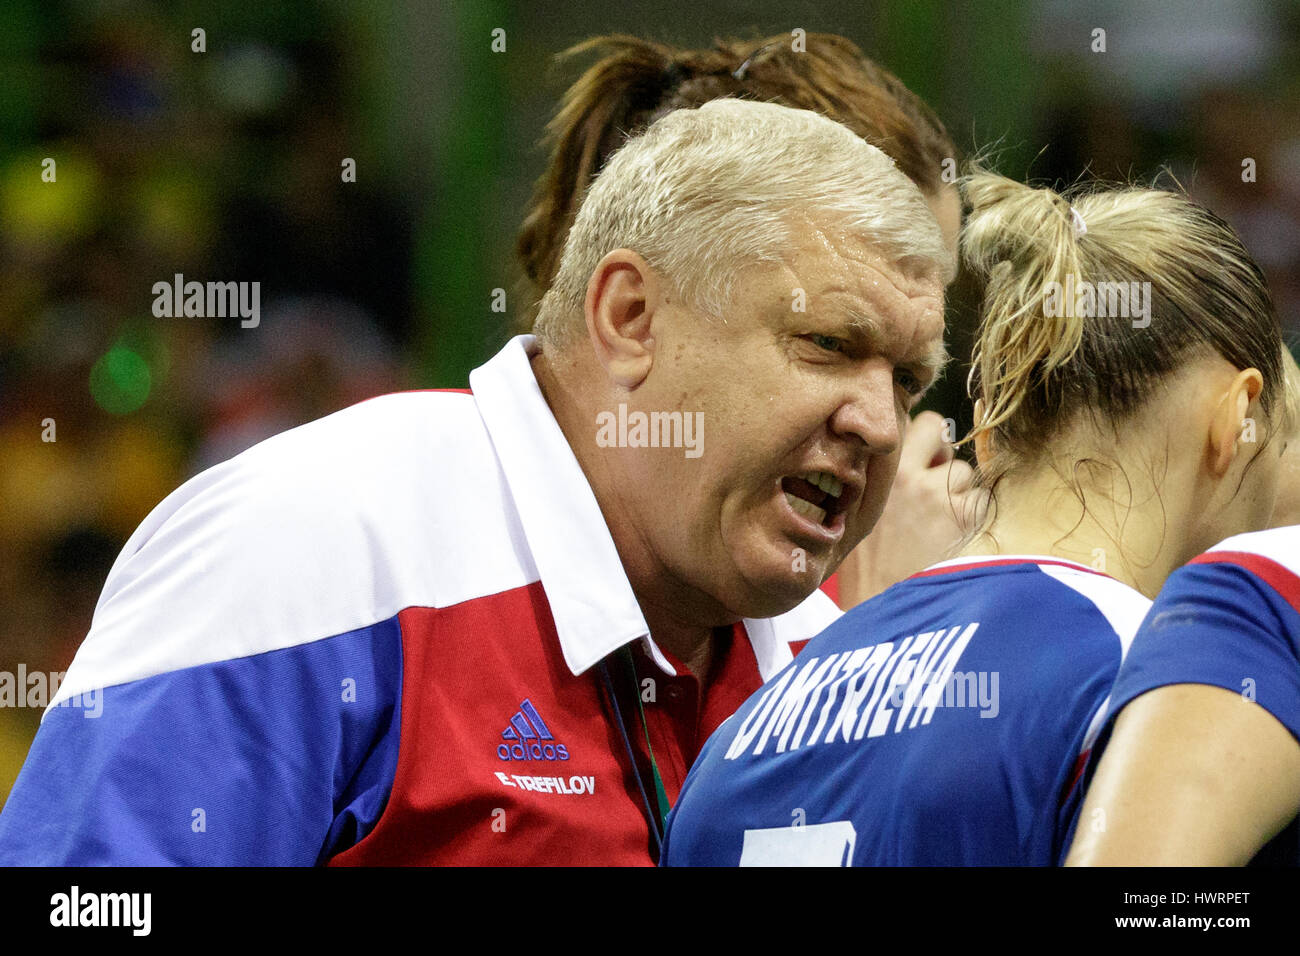 Rio de Janeiro, Brazil. 20 August 2016 Russia's coach Evgenii Trefilov during the women's handball gold medal match Russia vs. France at the 2016 Olym Stock Photo